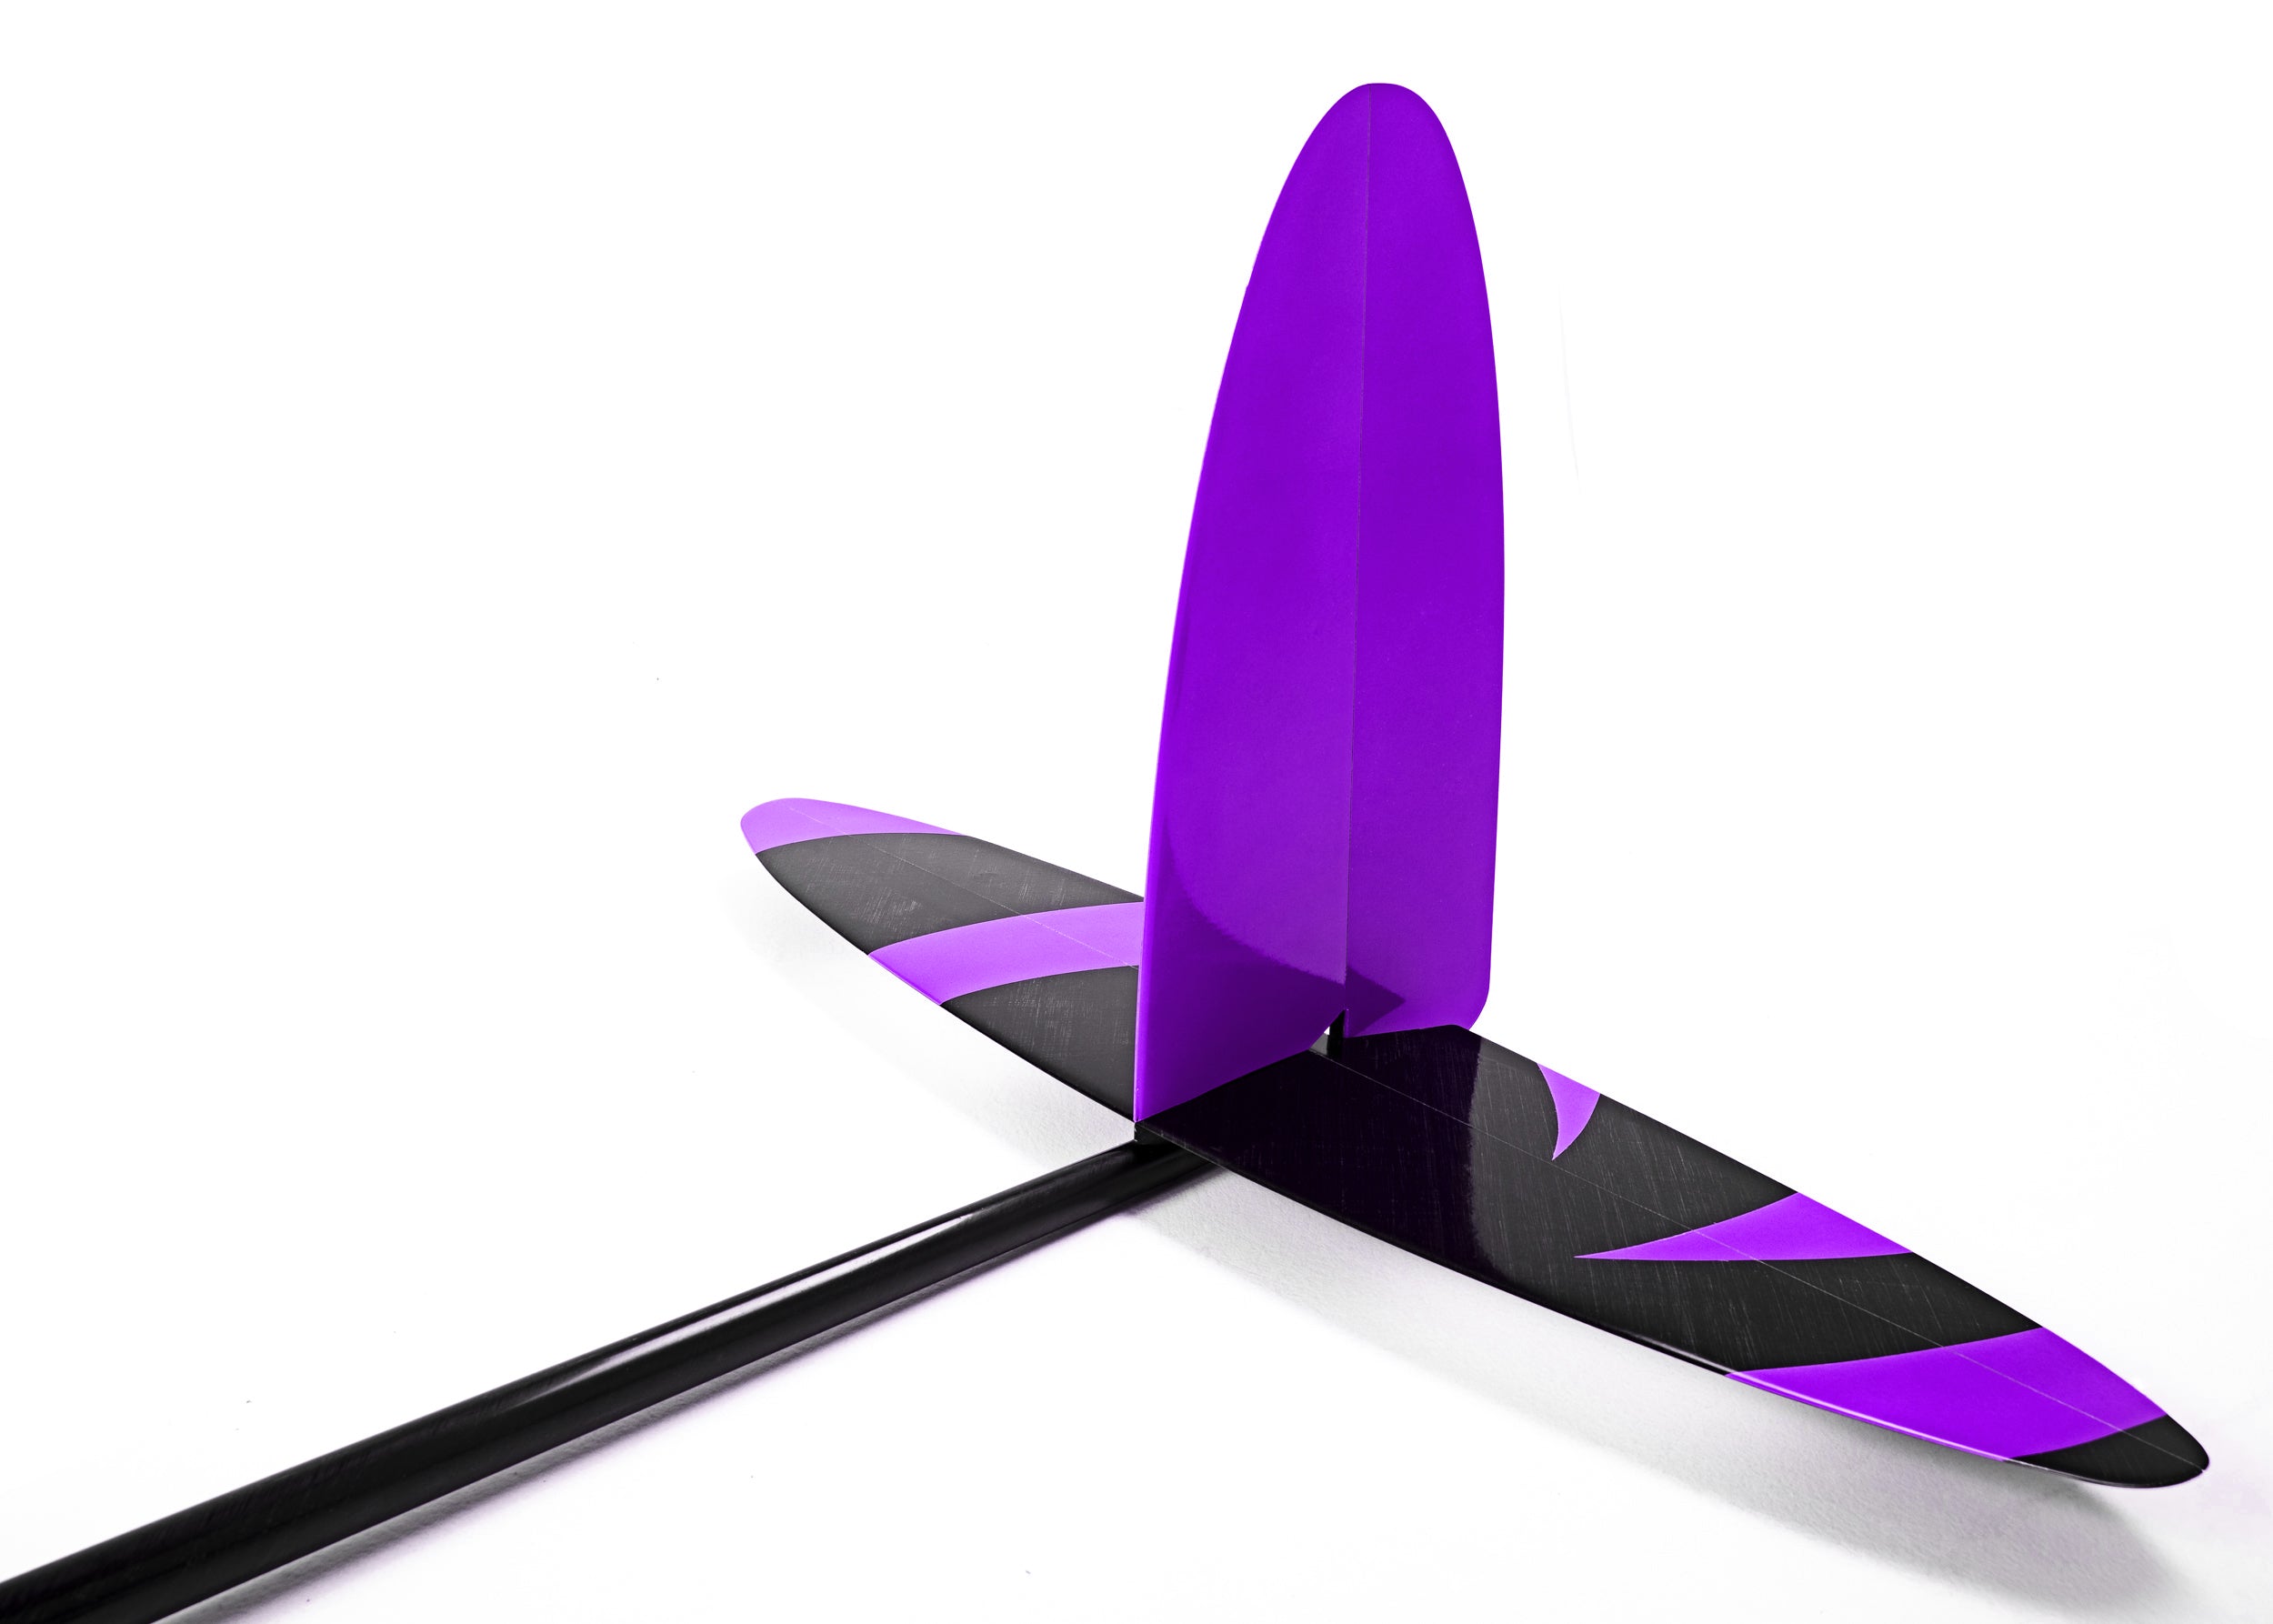 F5J Voyager - Black & Purple